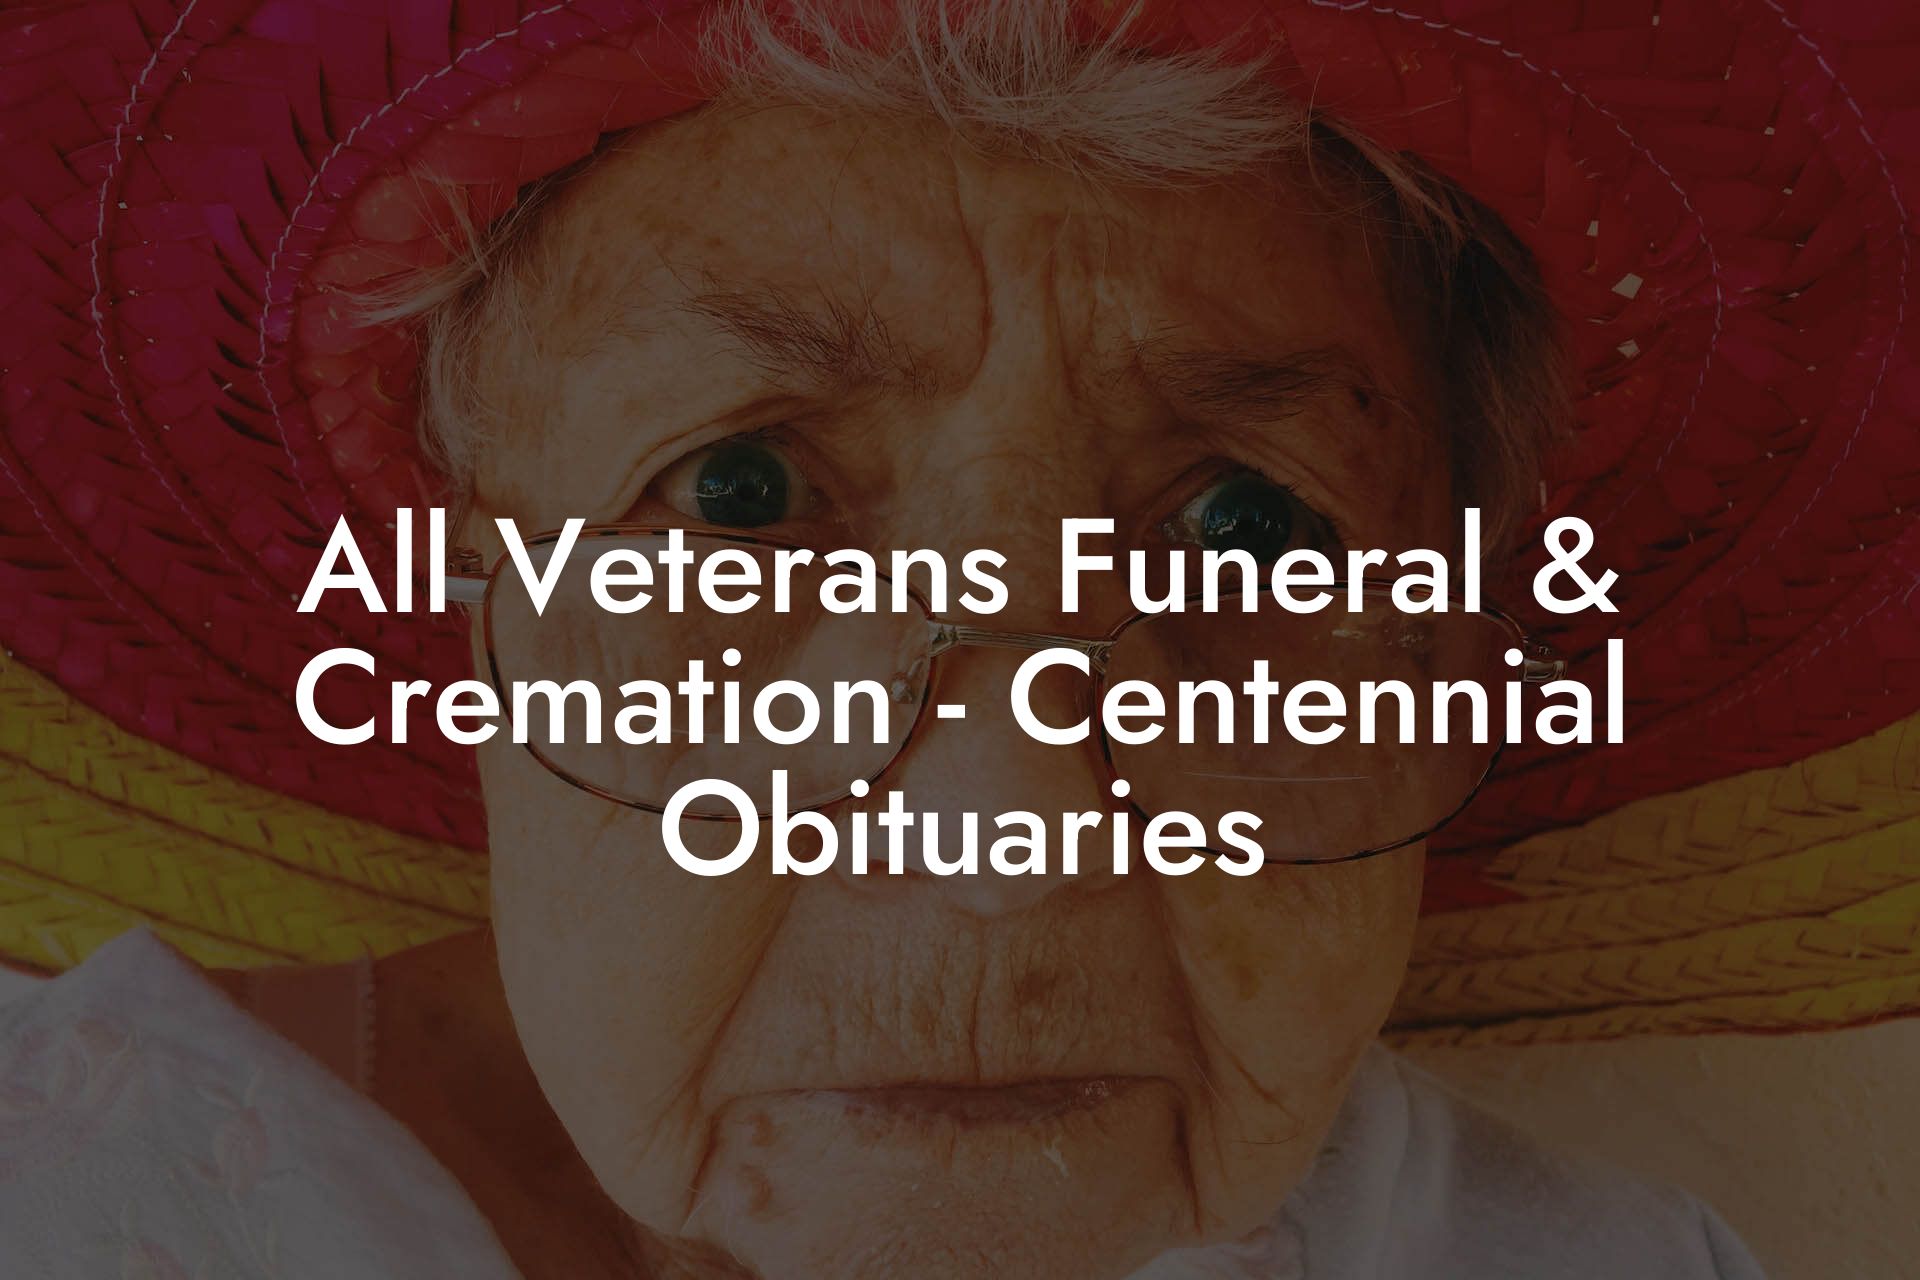 All Veterans Funeral & Cremation - Centennial Obituaries